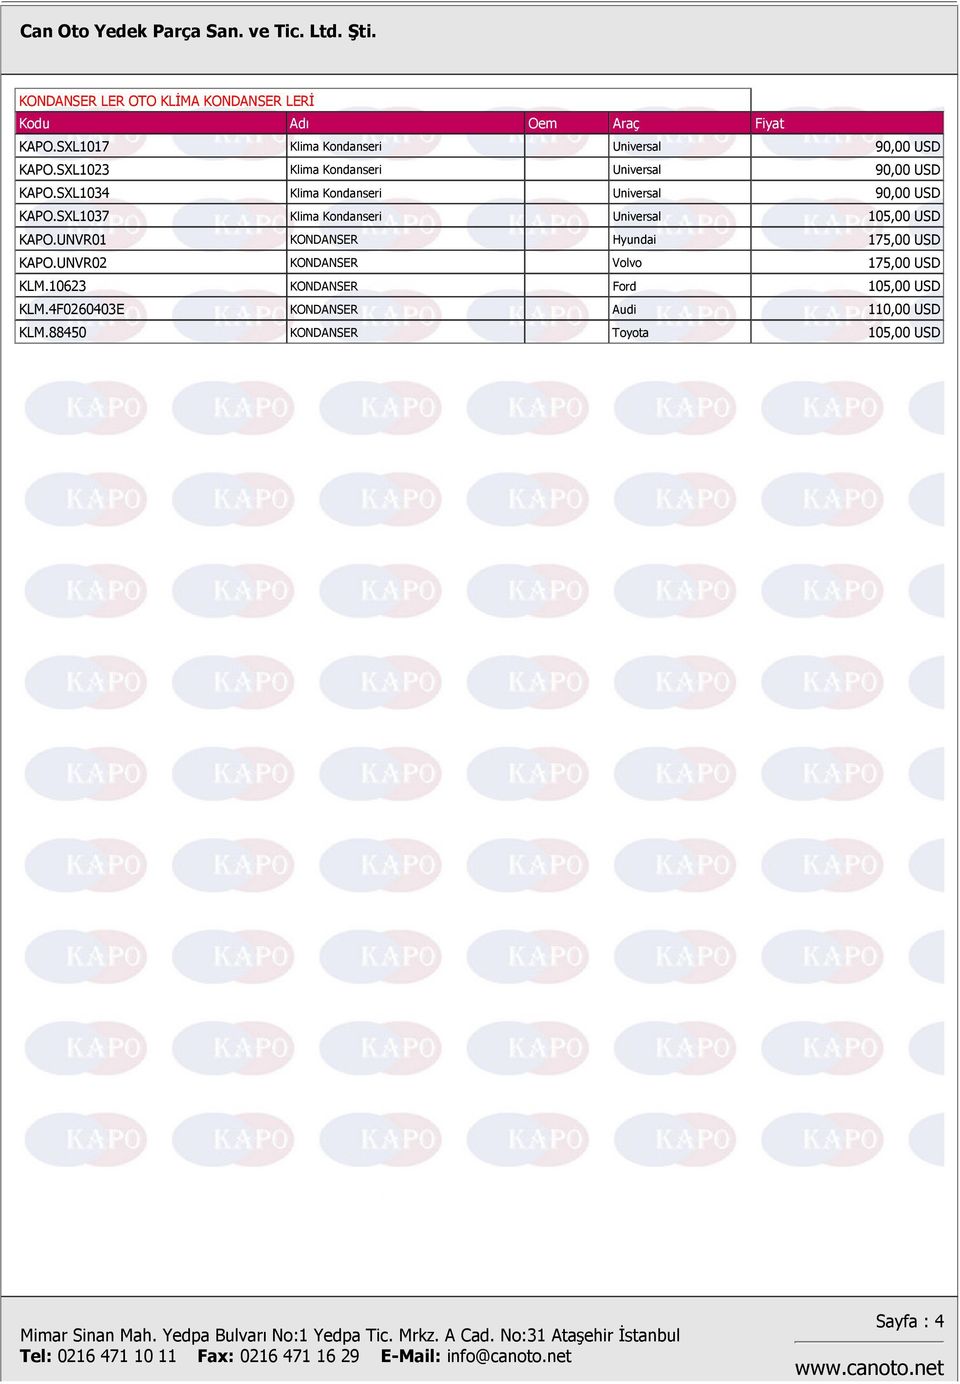 SXL1037 Klima Kondanseri Universal 105,00 USD KAPO.UNVR01 KONDANSER Hyundai 175,00 USD KAPO.